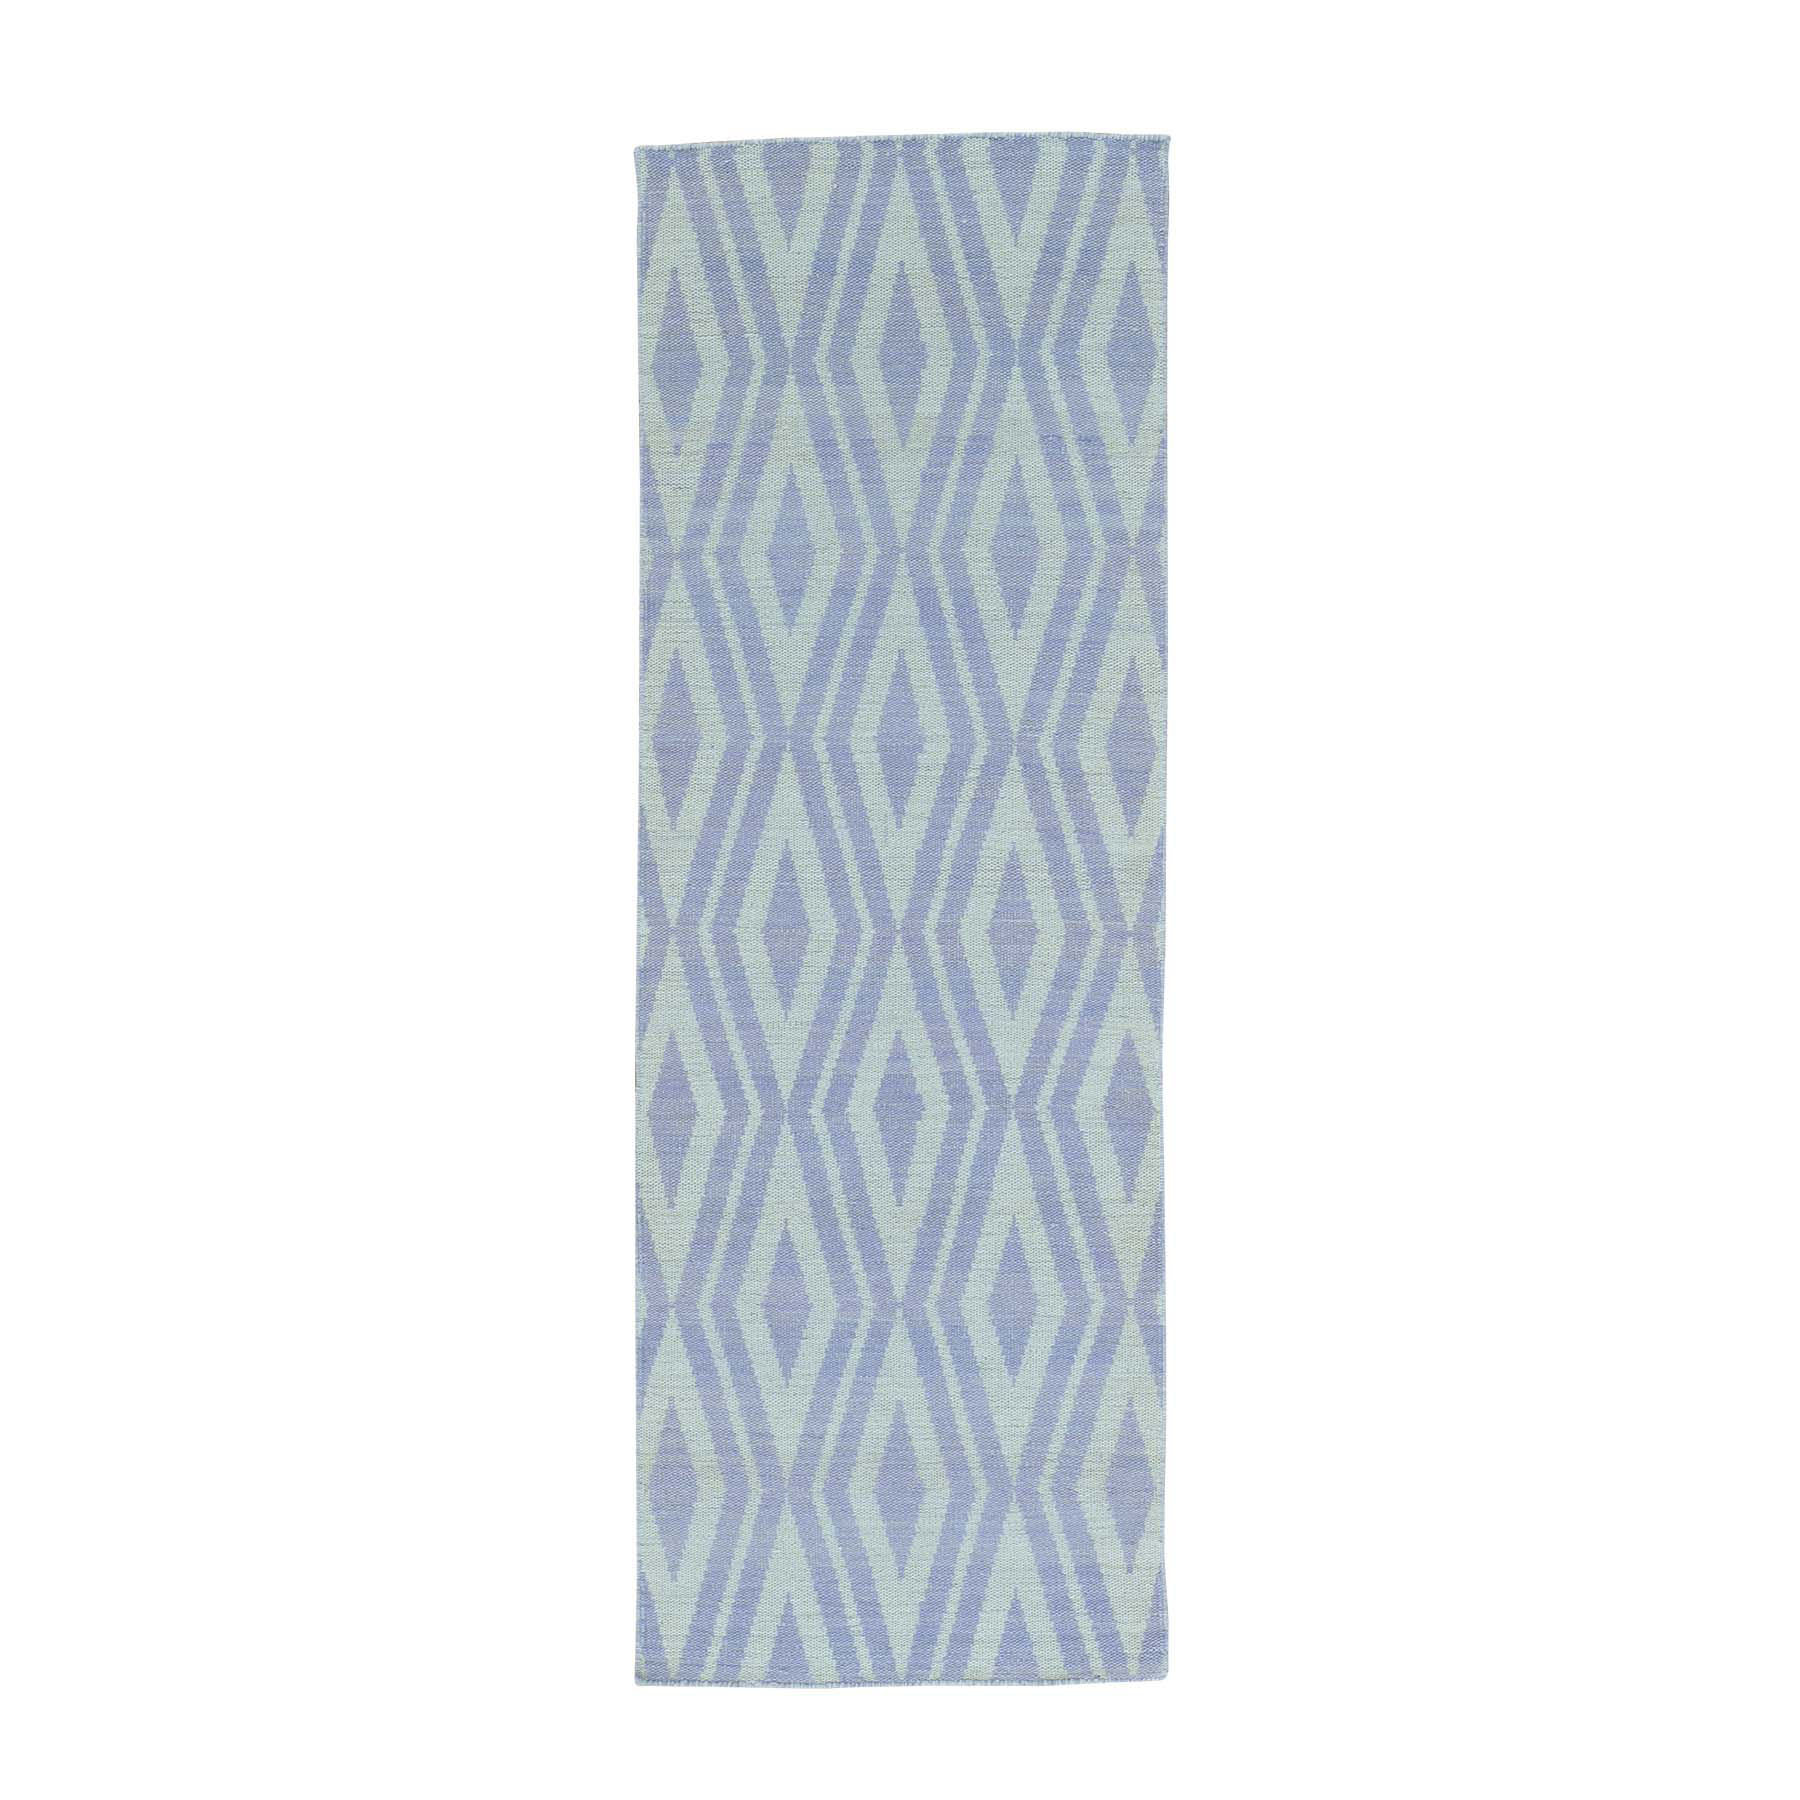 2'8"x8' Runner Hand Woven Flat Weave Reversible Kilim Oriental Rug 